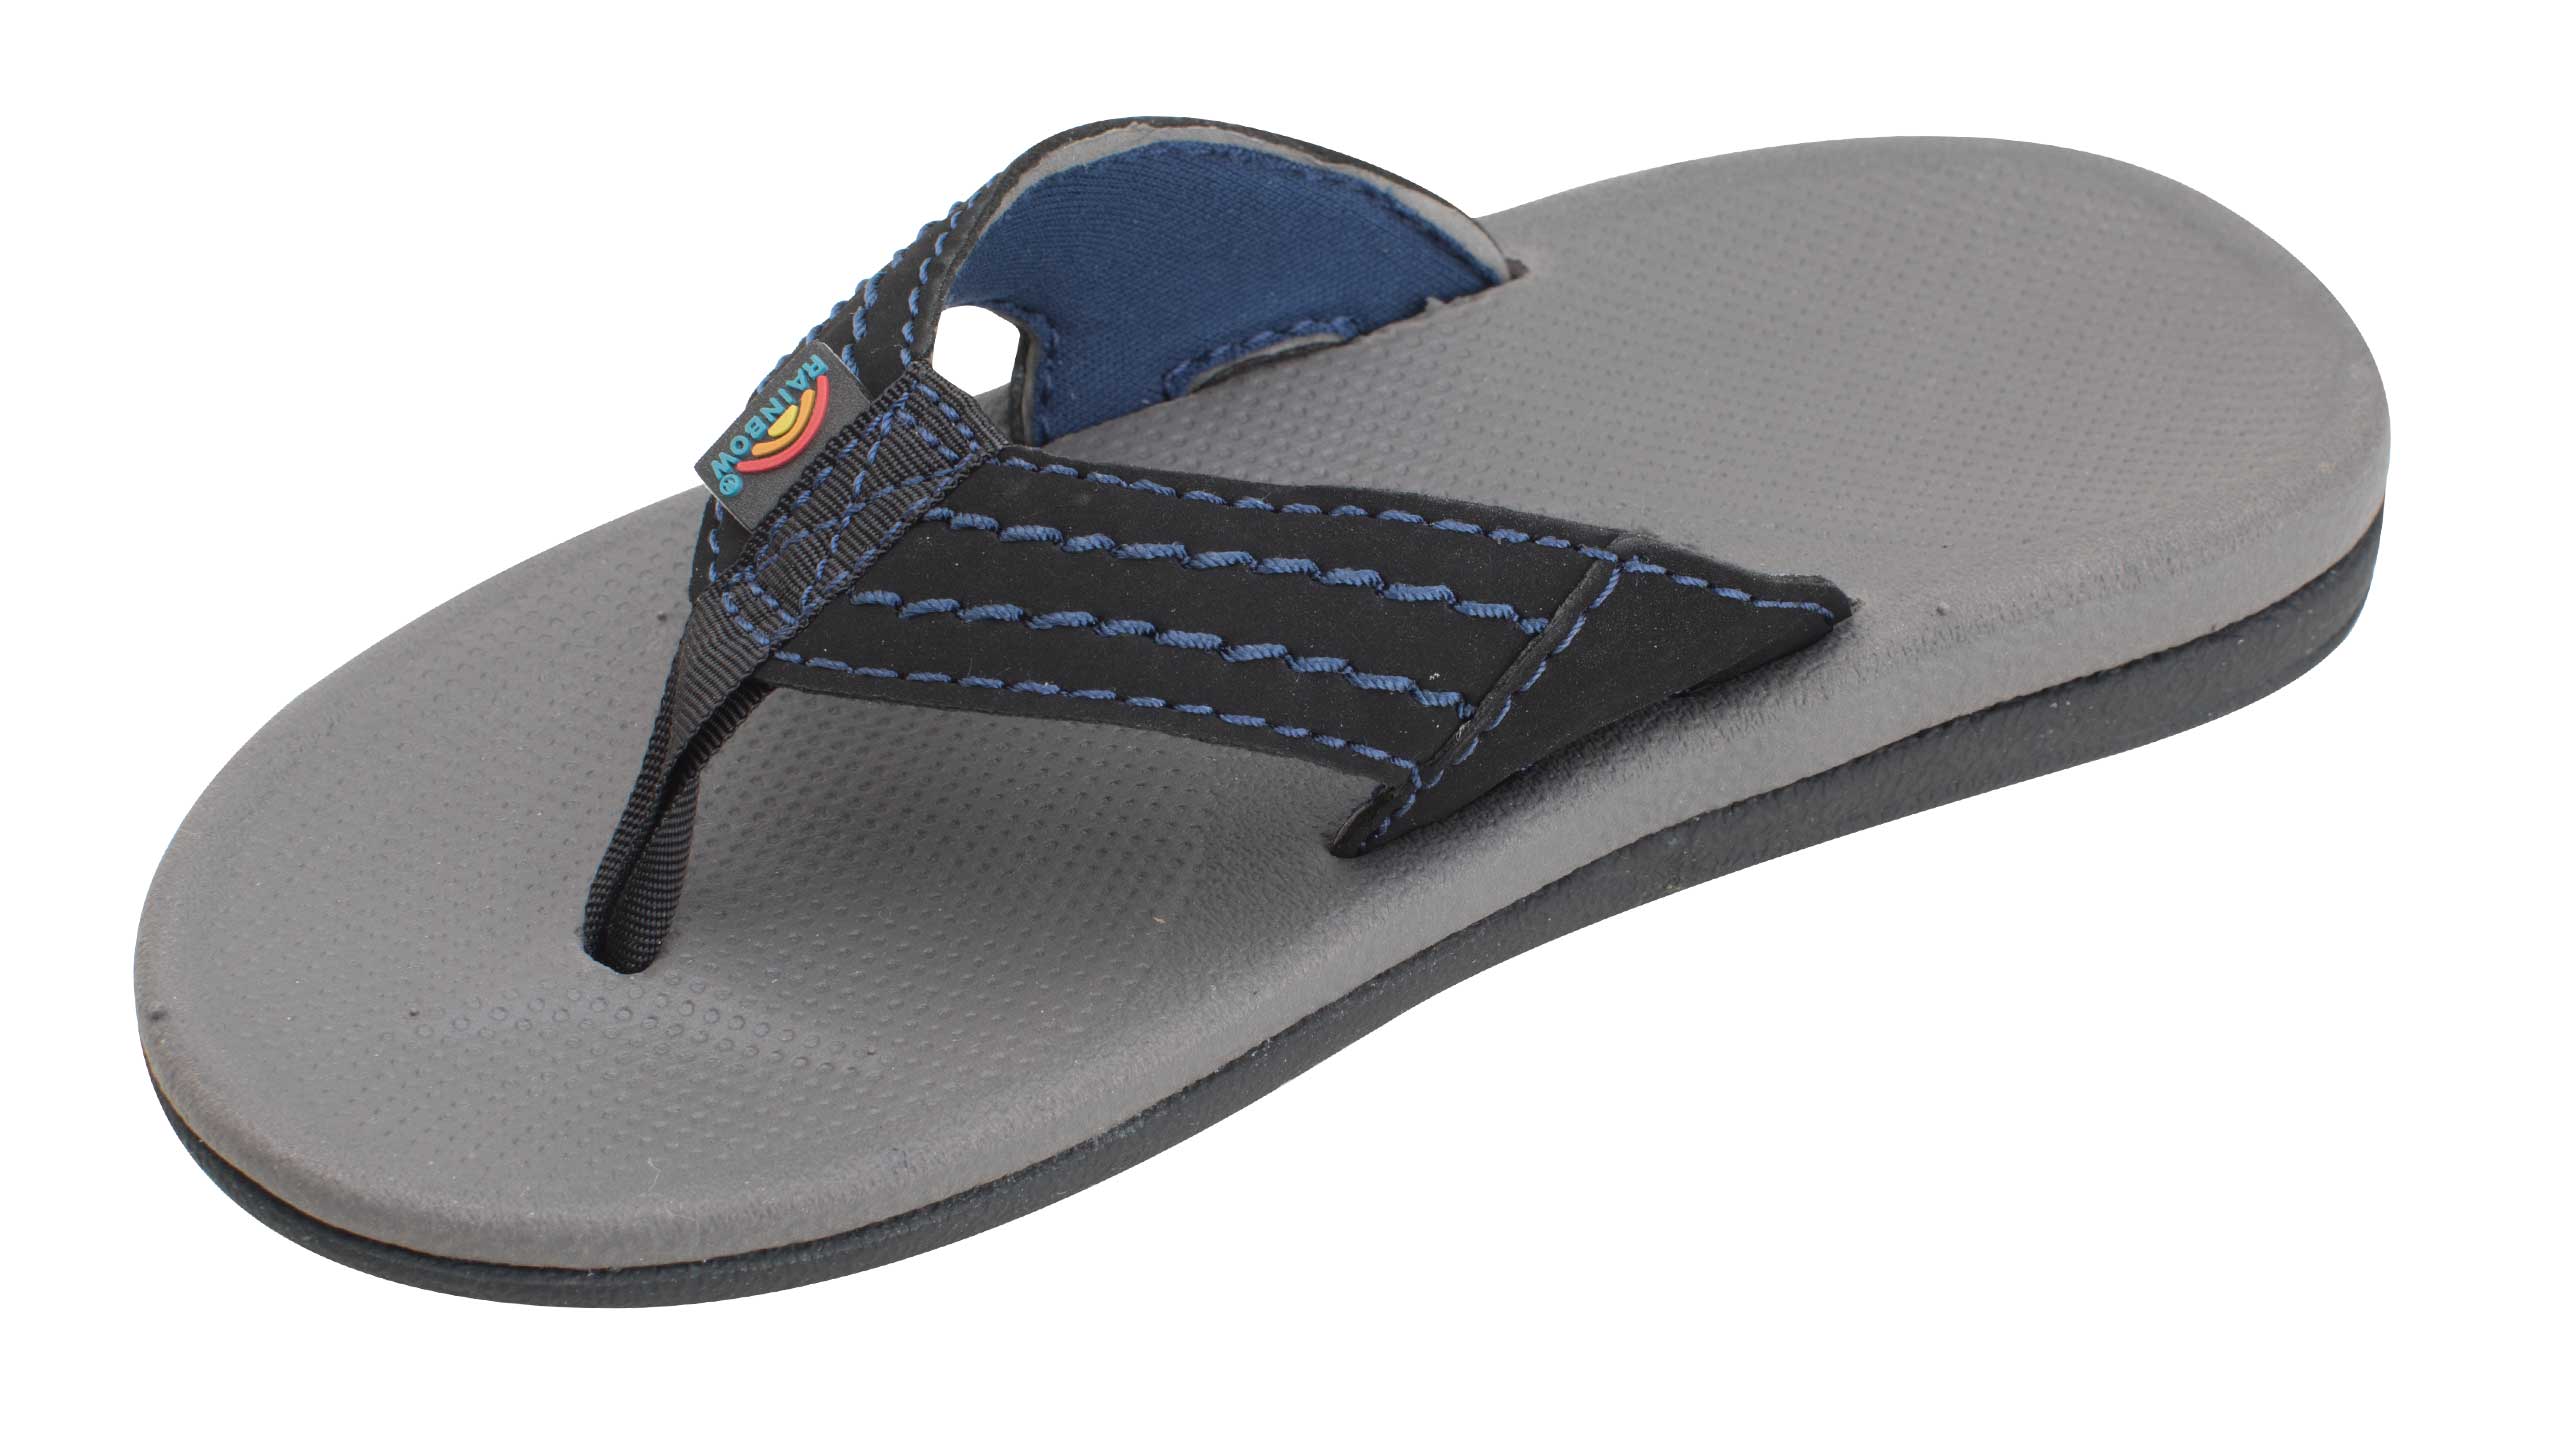 rubber bottom sandals